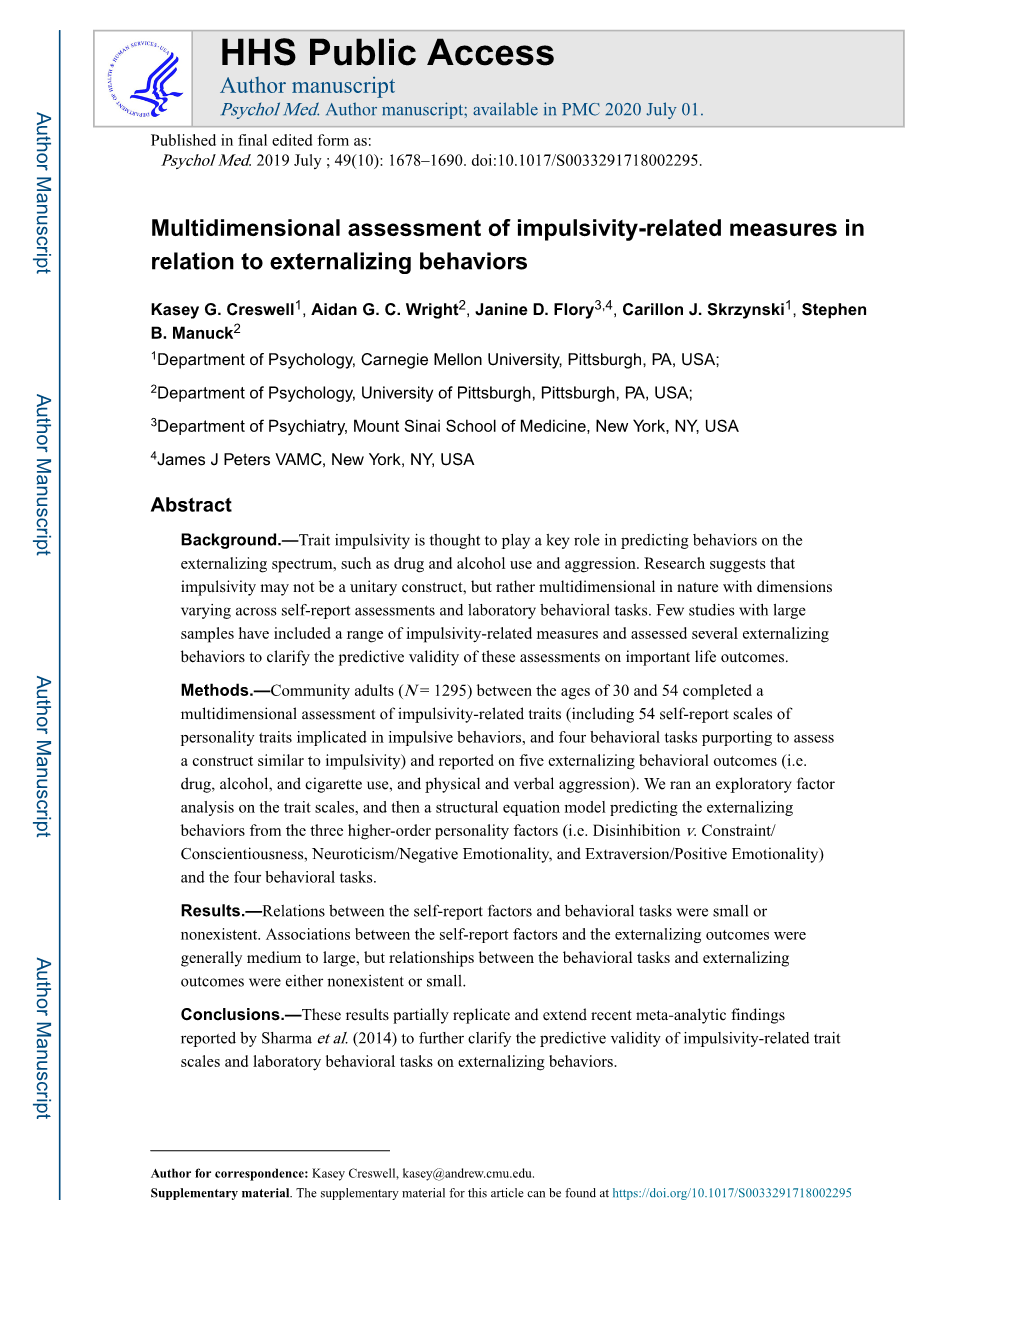 Multidimensional Assessment of Impulsivity-Related Measures in Relation to Externalizing Behaviors